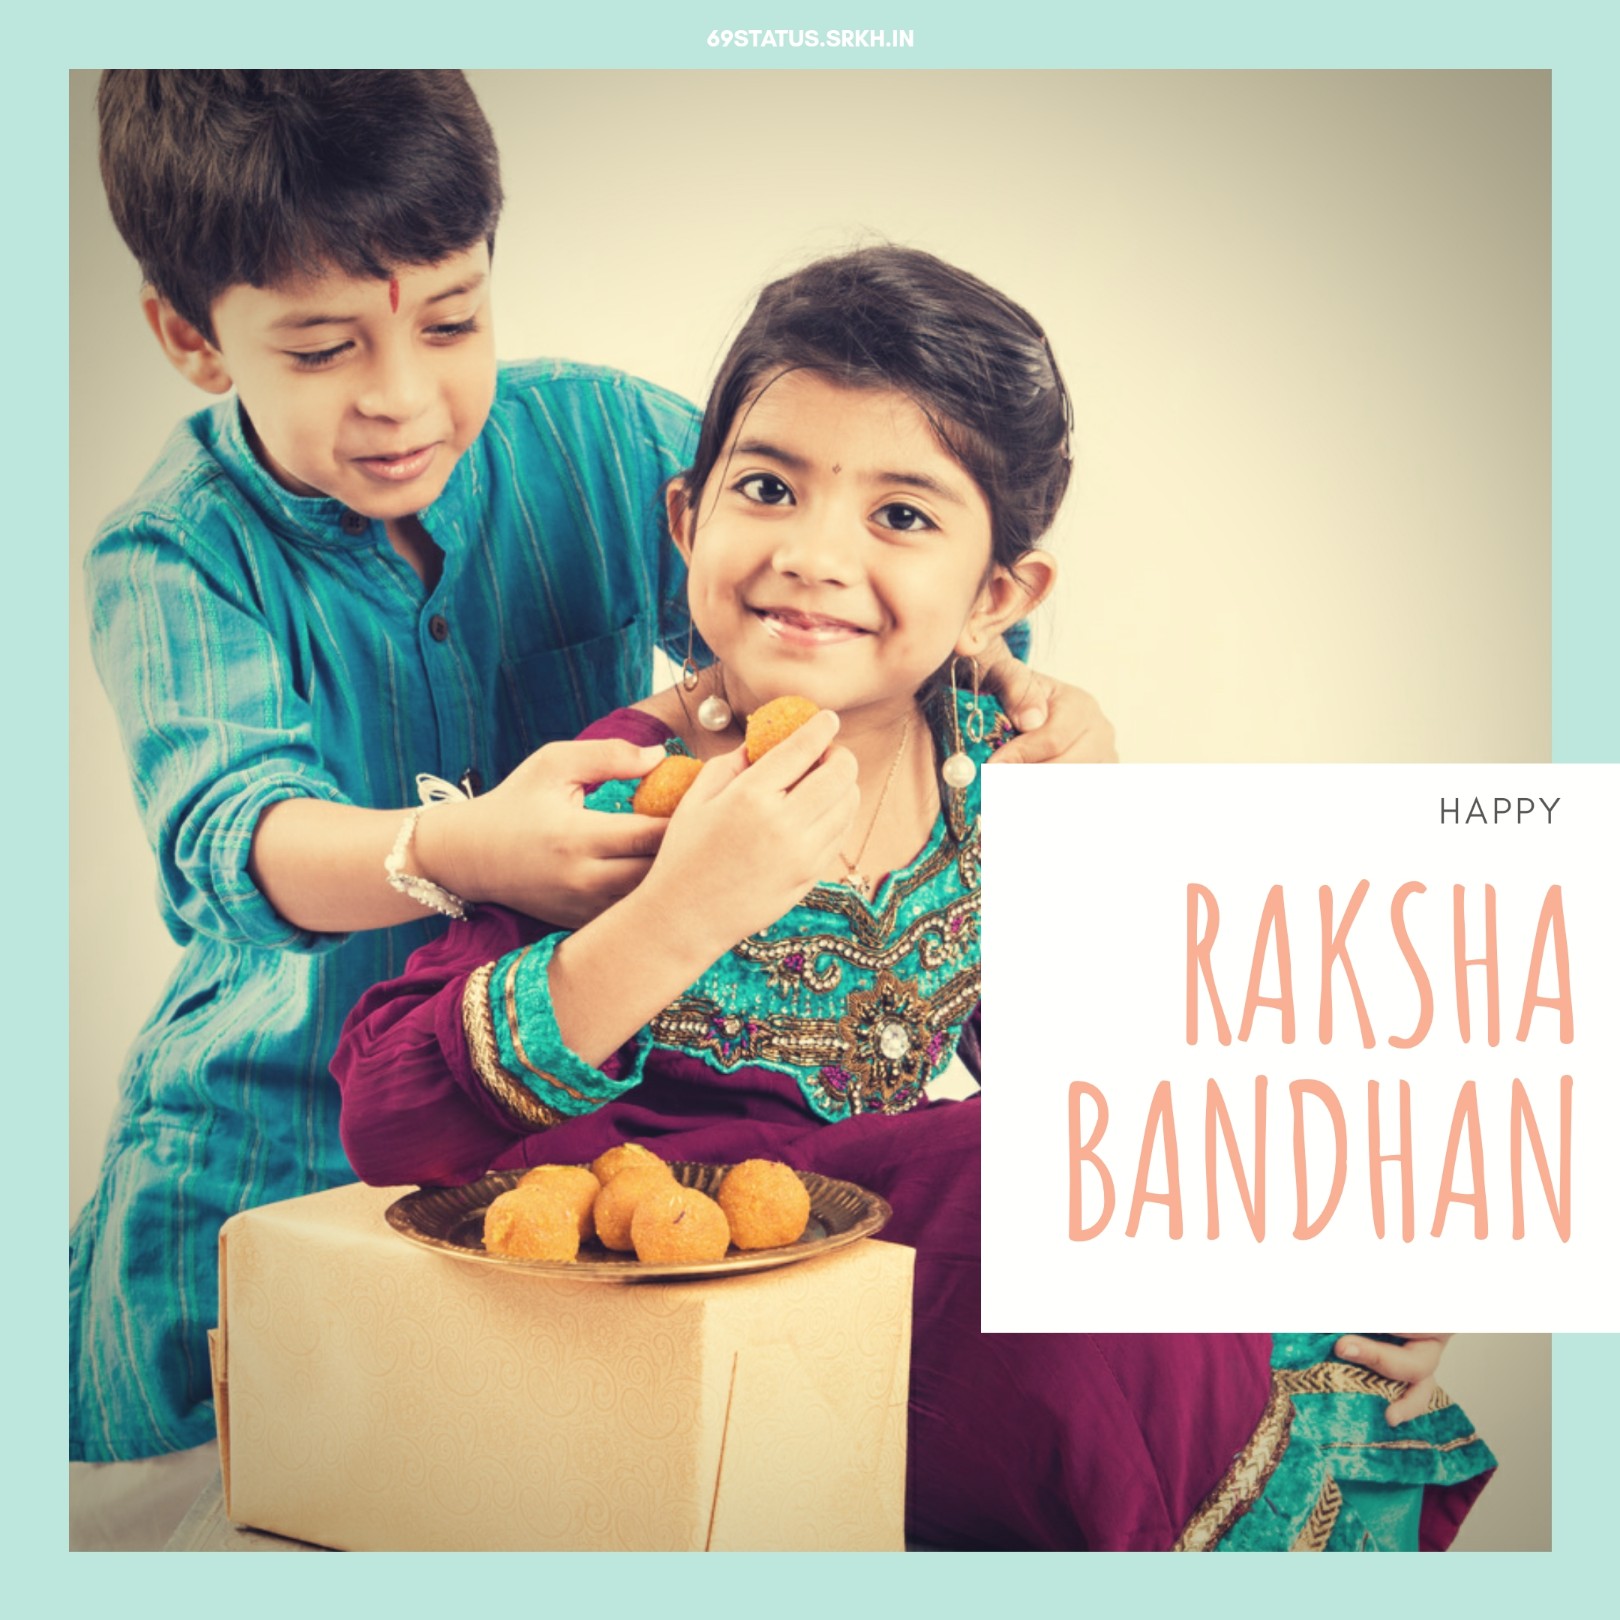 Brother and Sister Raksha Bandhan Images